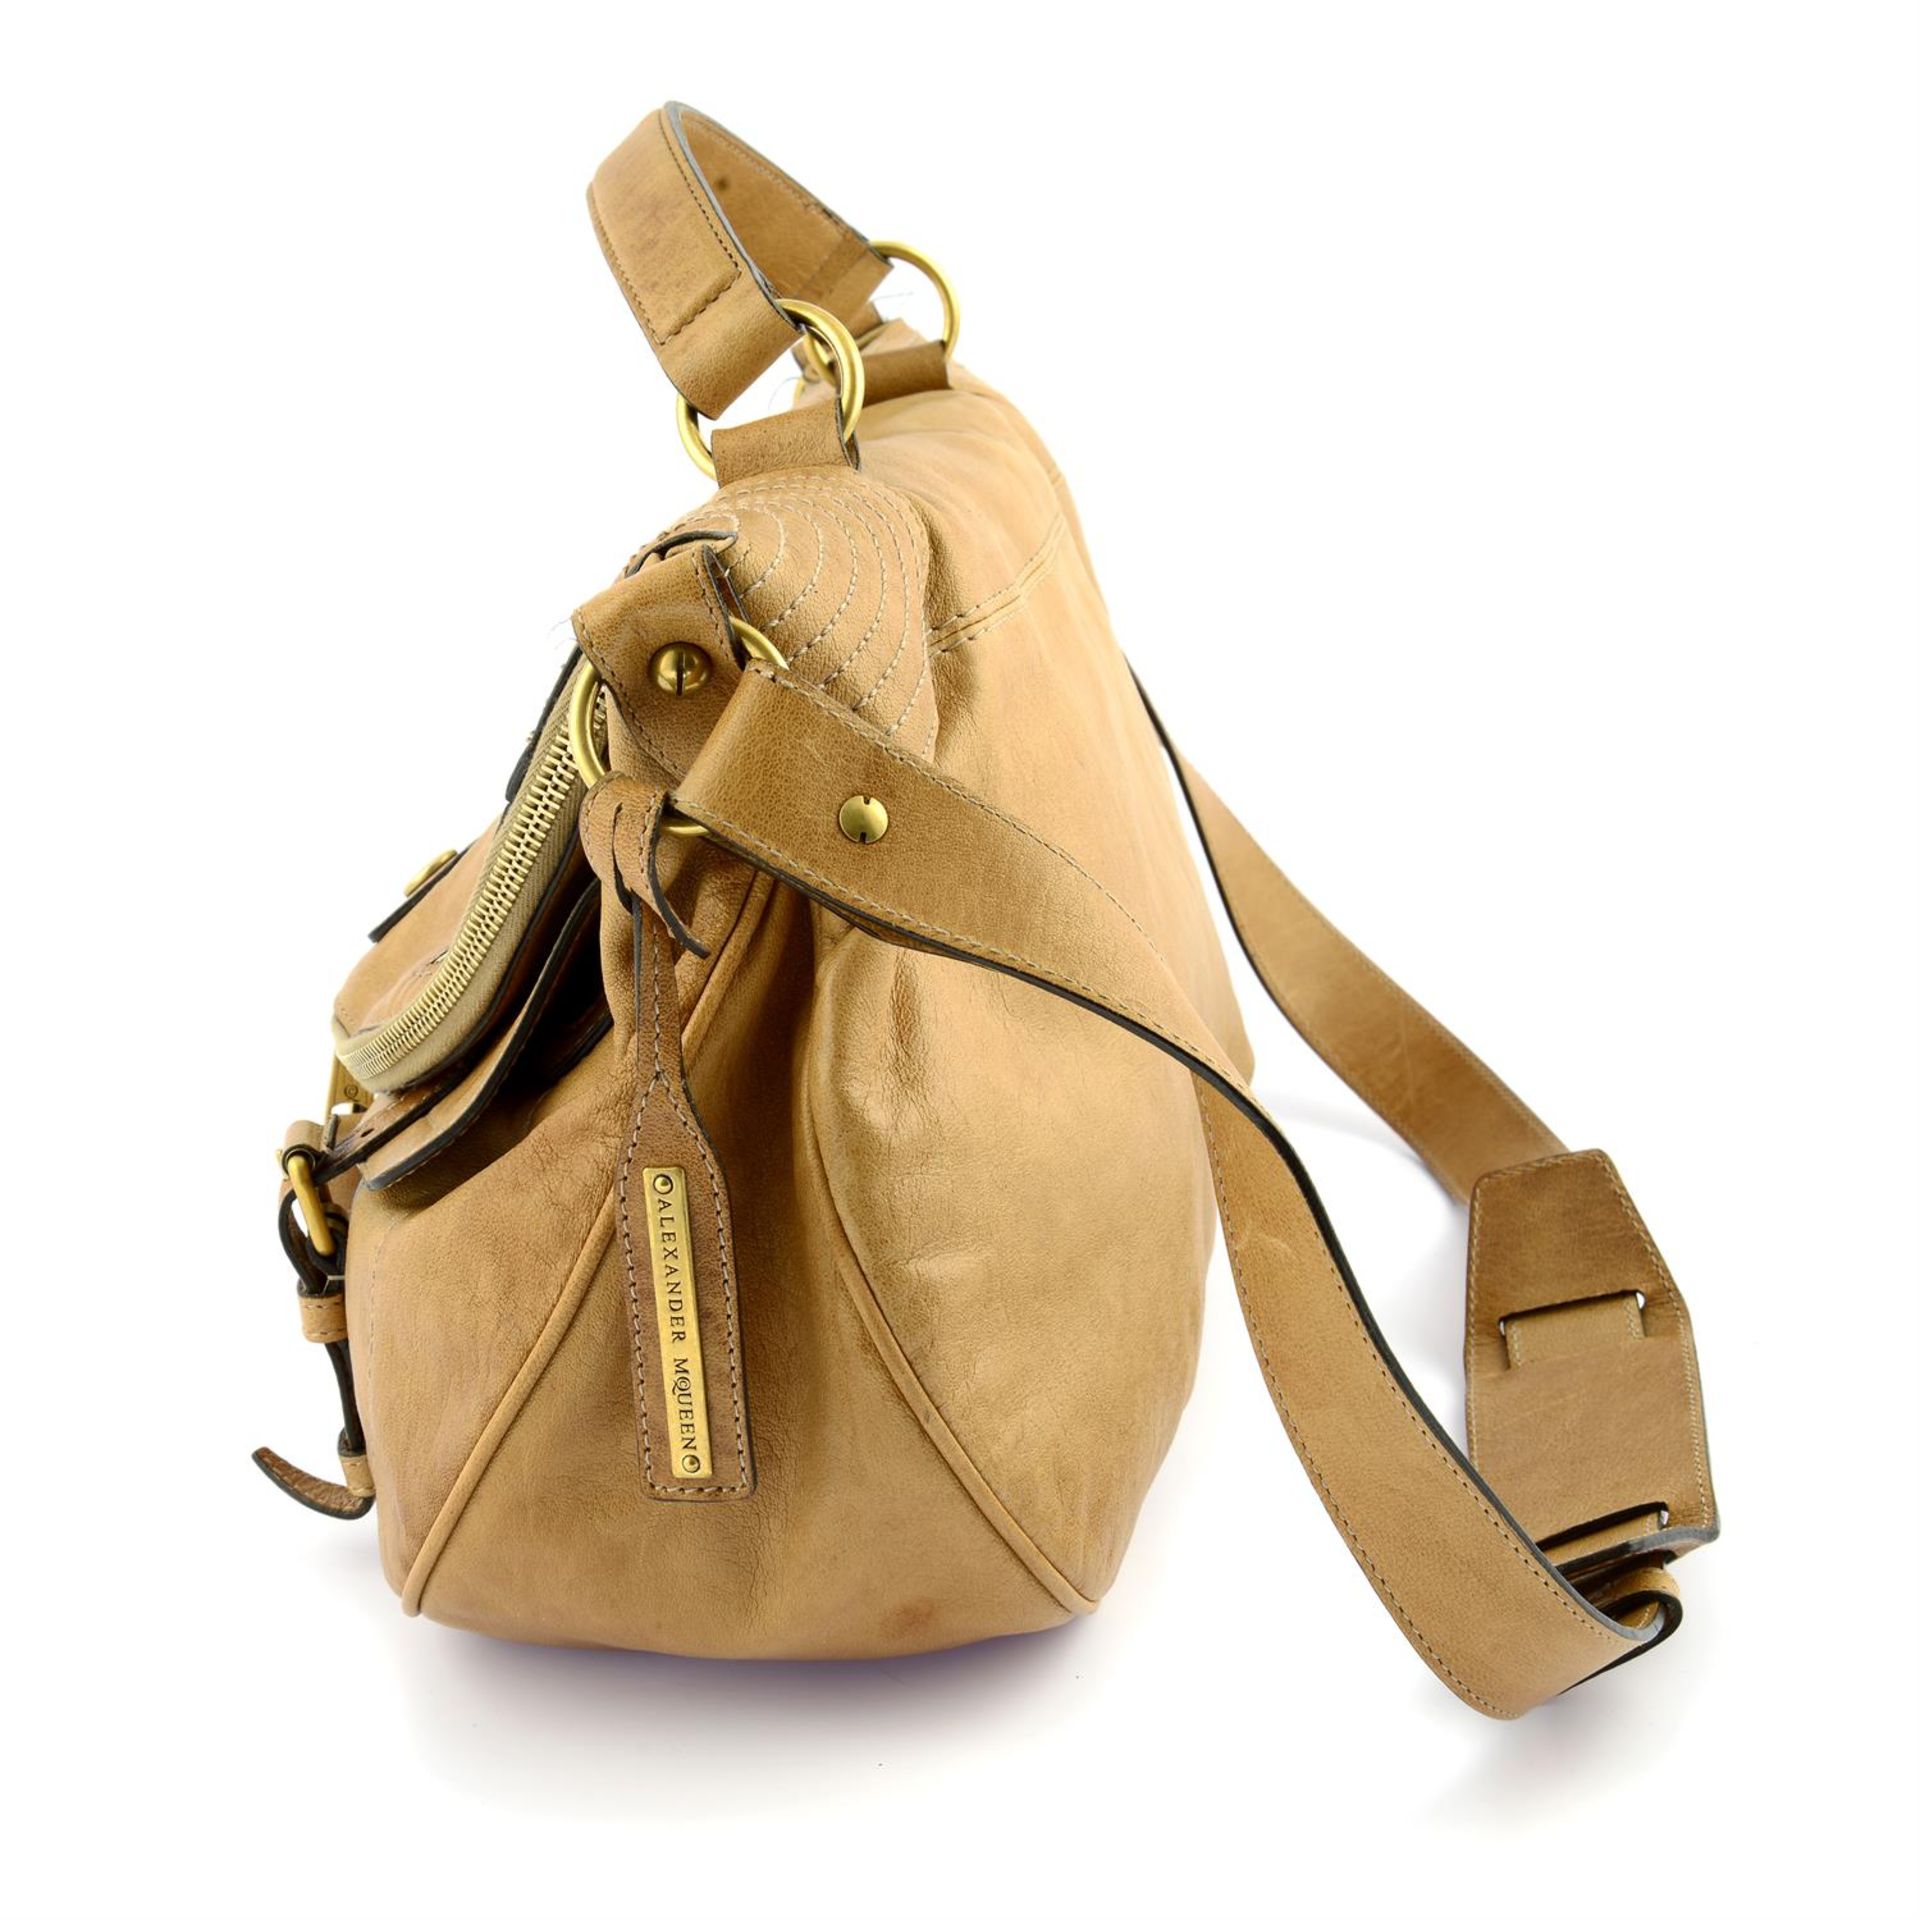 ALEXANDER MCQUEEN - a tan leather Faithfull handbag. - Image 3 of 5